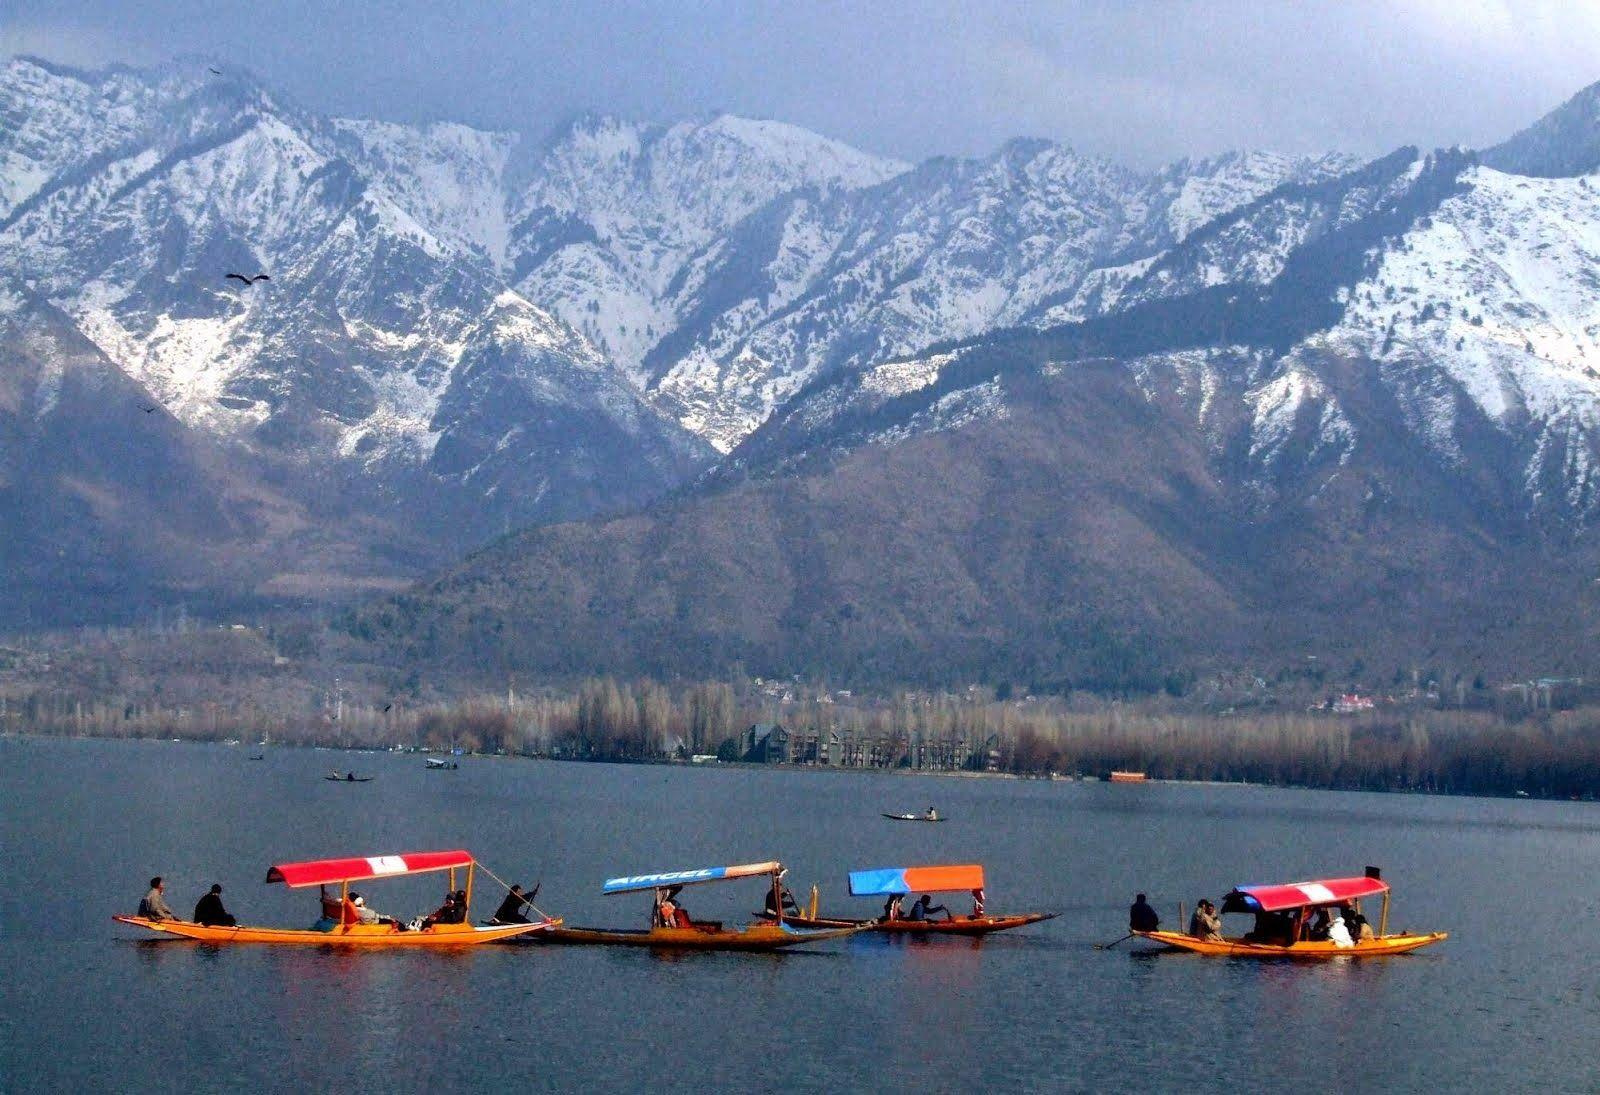 Jammu & Kashmir Tourism Planning to Develop New Tourist Spots